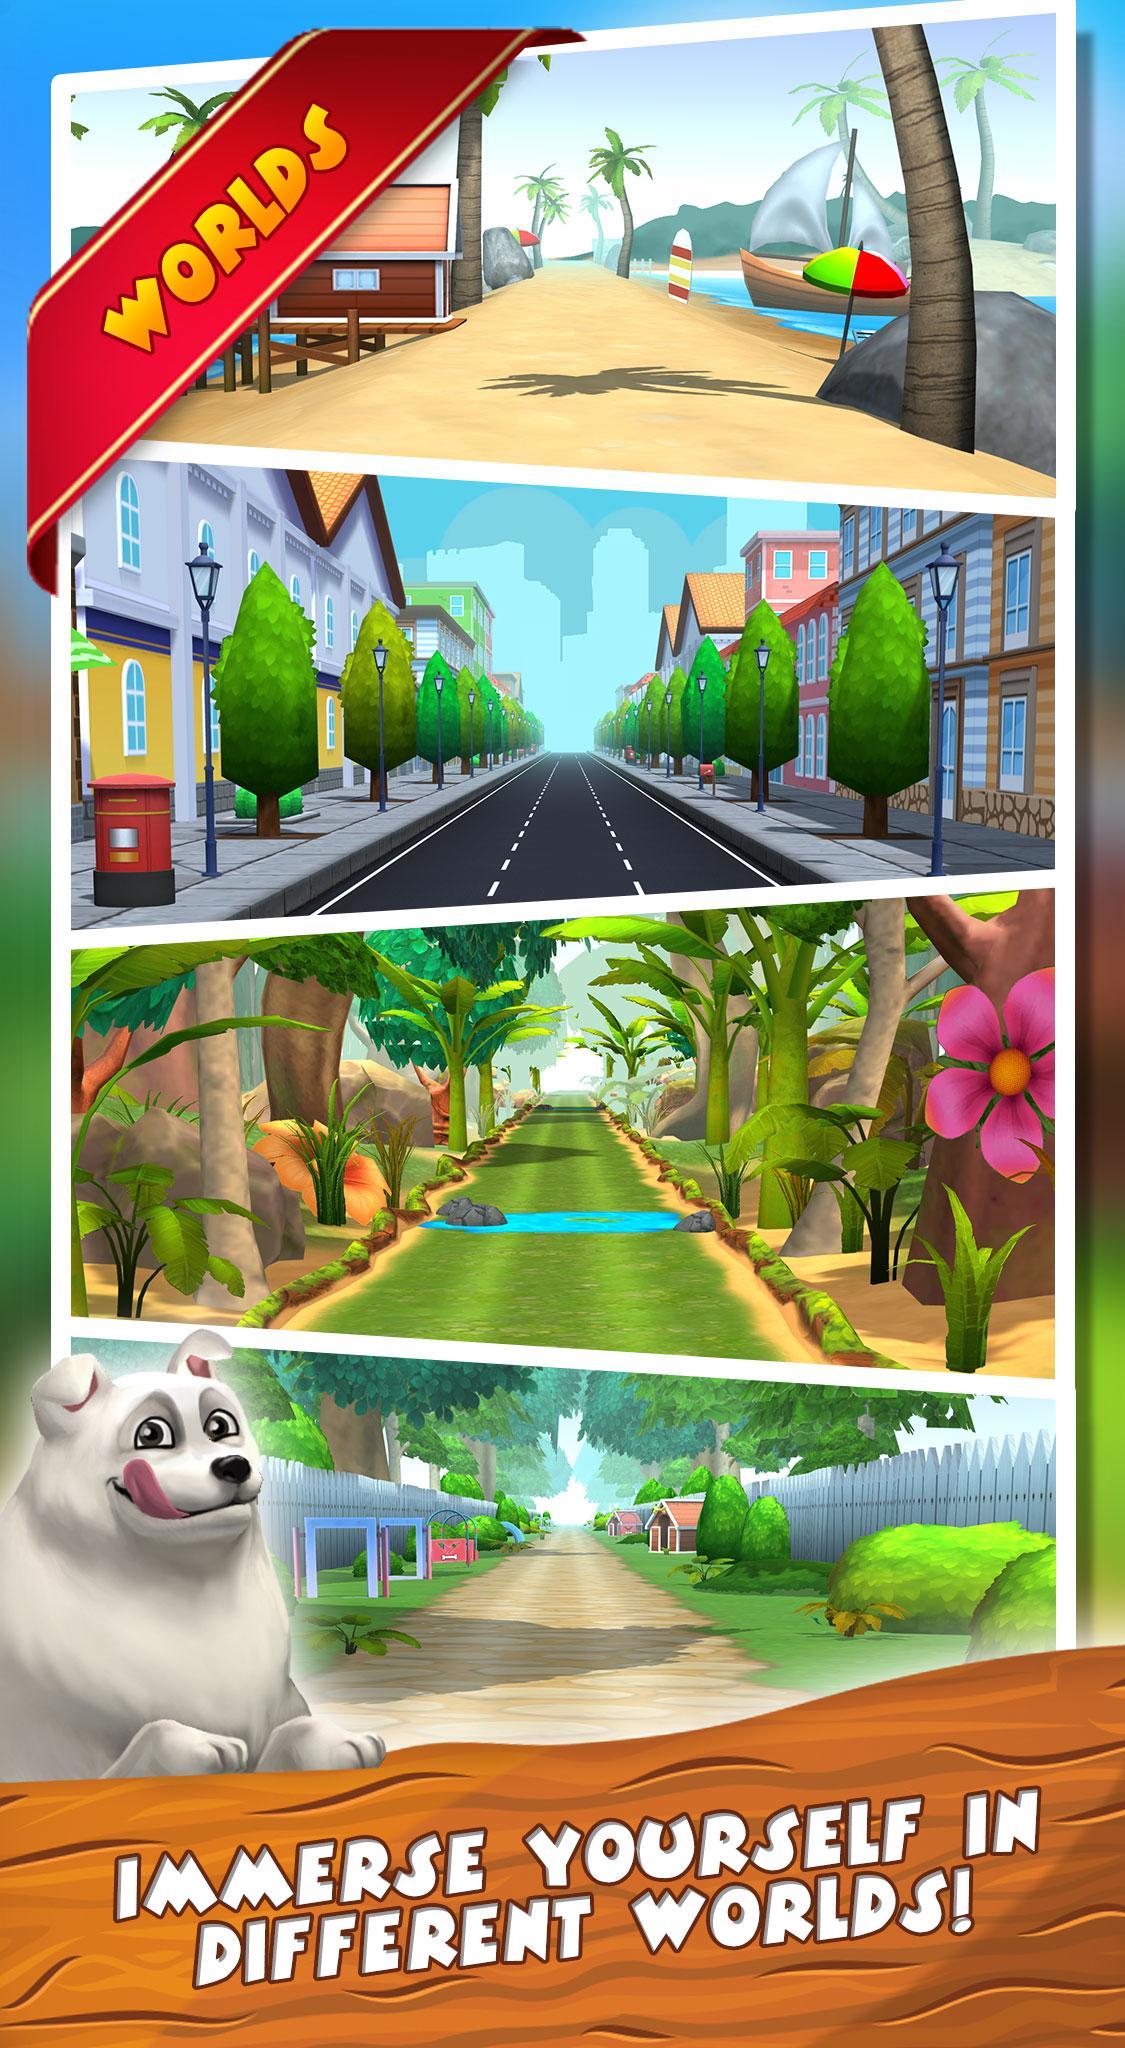 Doggo screenshot game